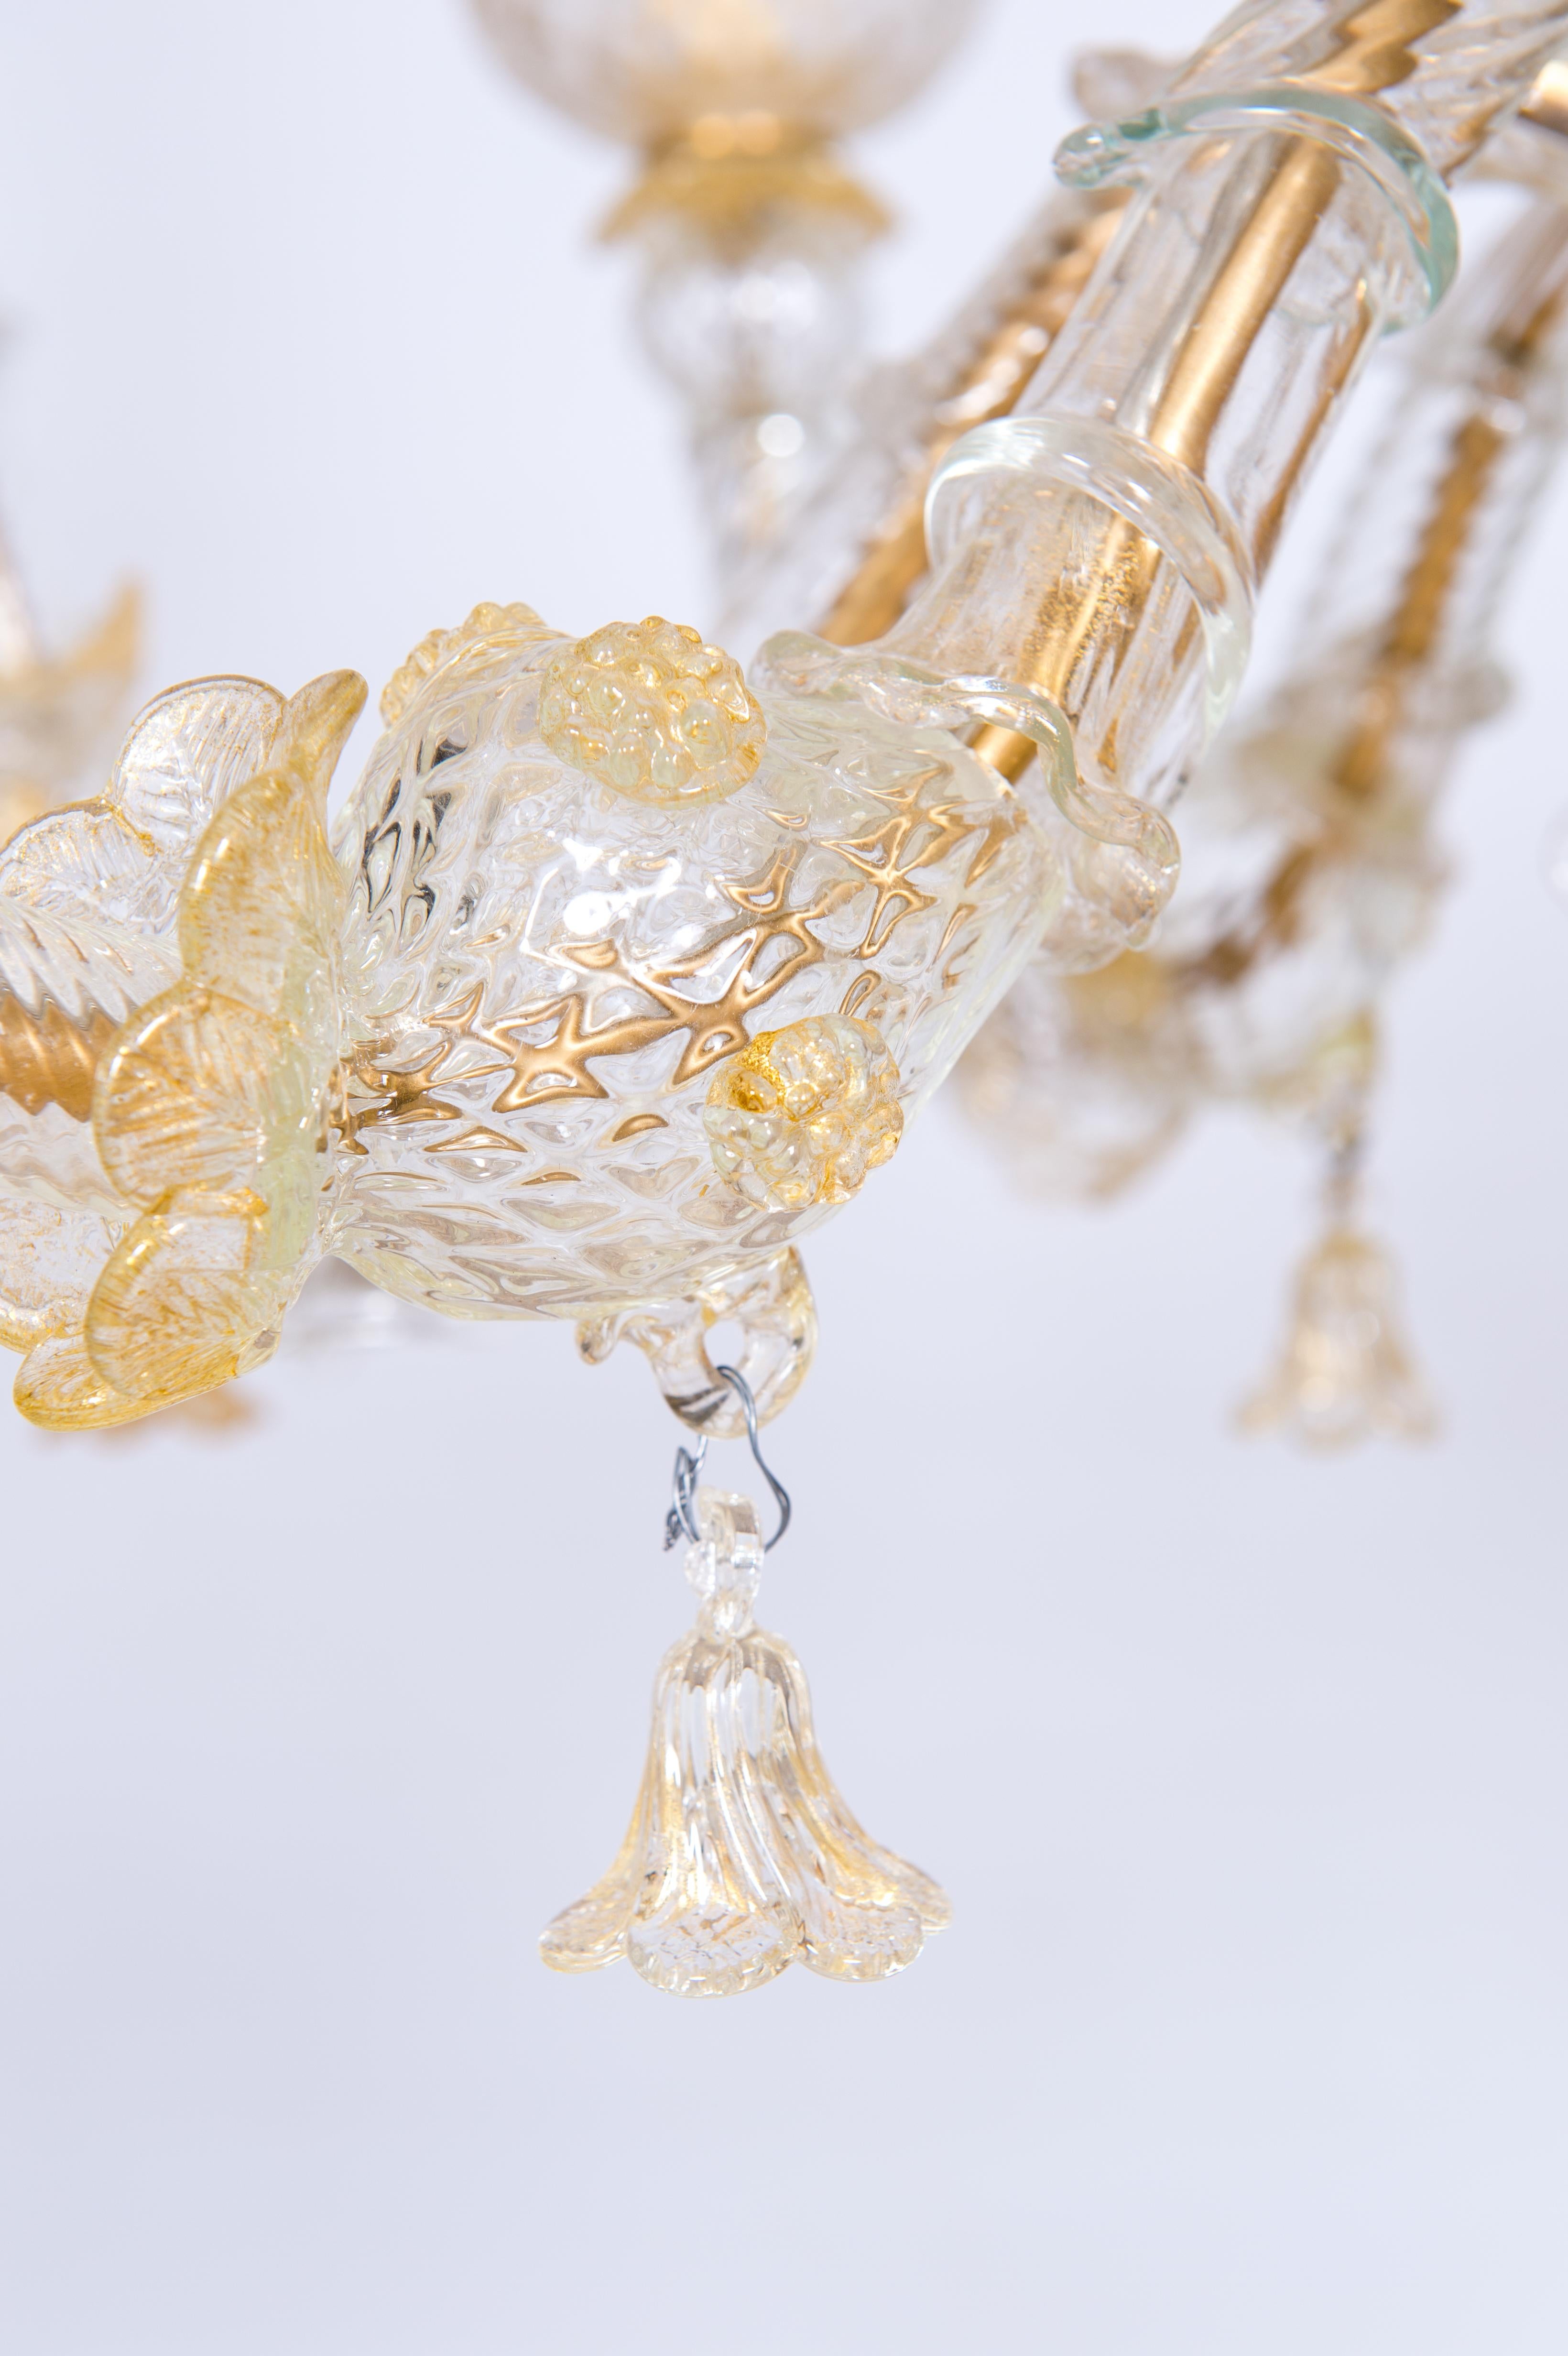 Mid-20th Century Italian Venetian Ca' Rezzonico Gondola Chandelier, Blown Murano Glass, 24-K Gold